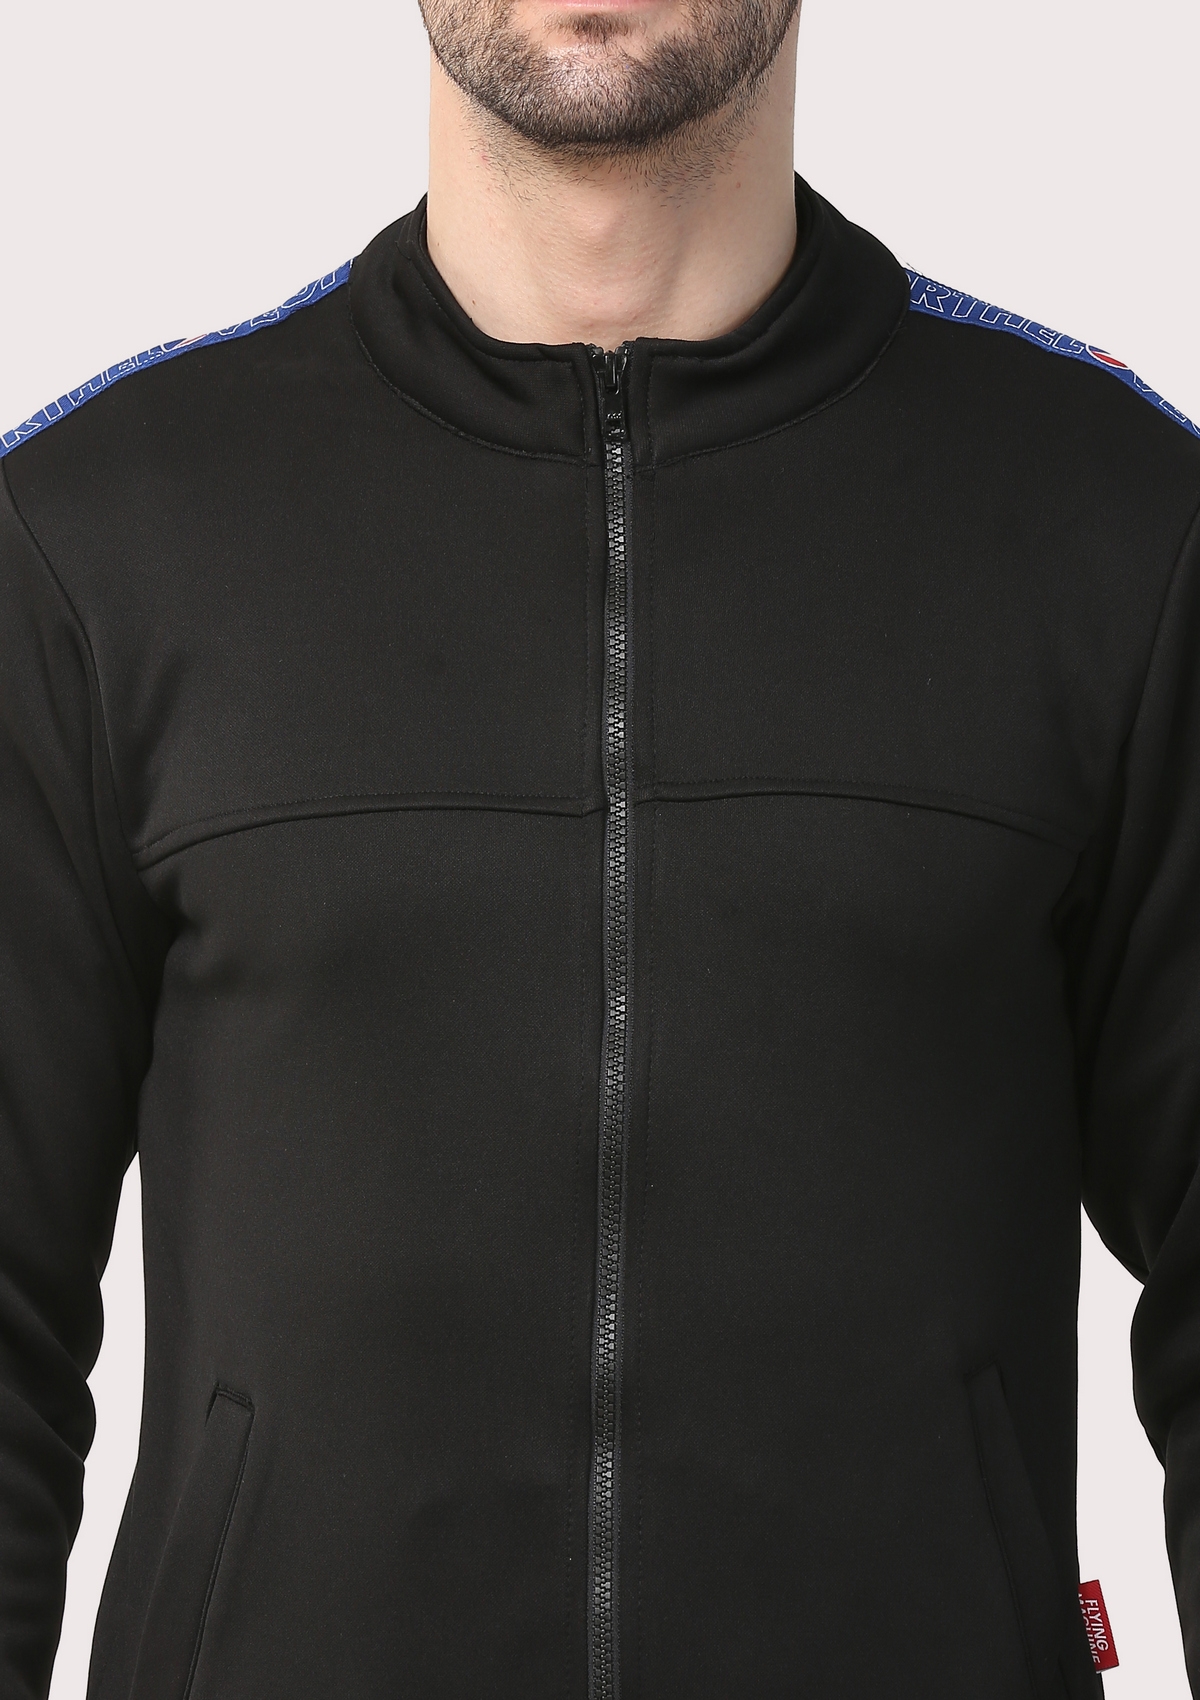 SOC PERFORMANCE | SOC Smart , Stylish & Warm Fleece Jacket 5